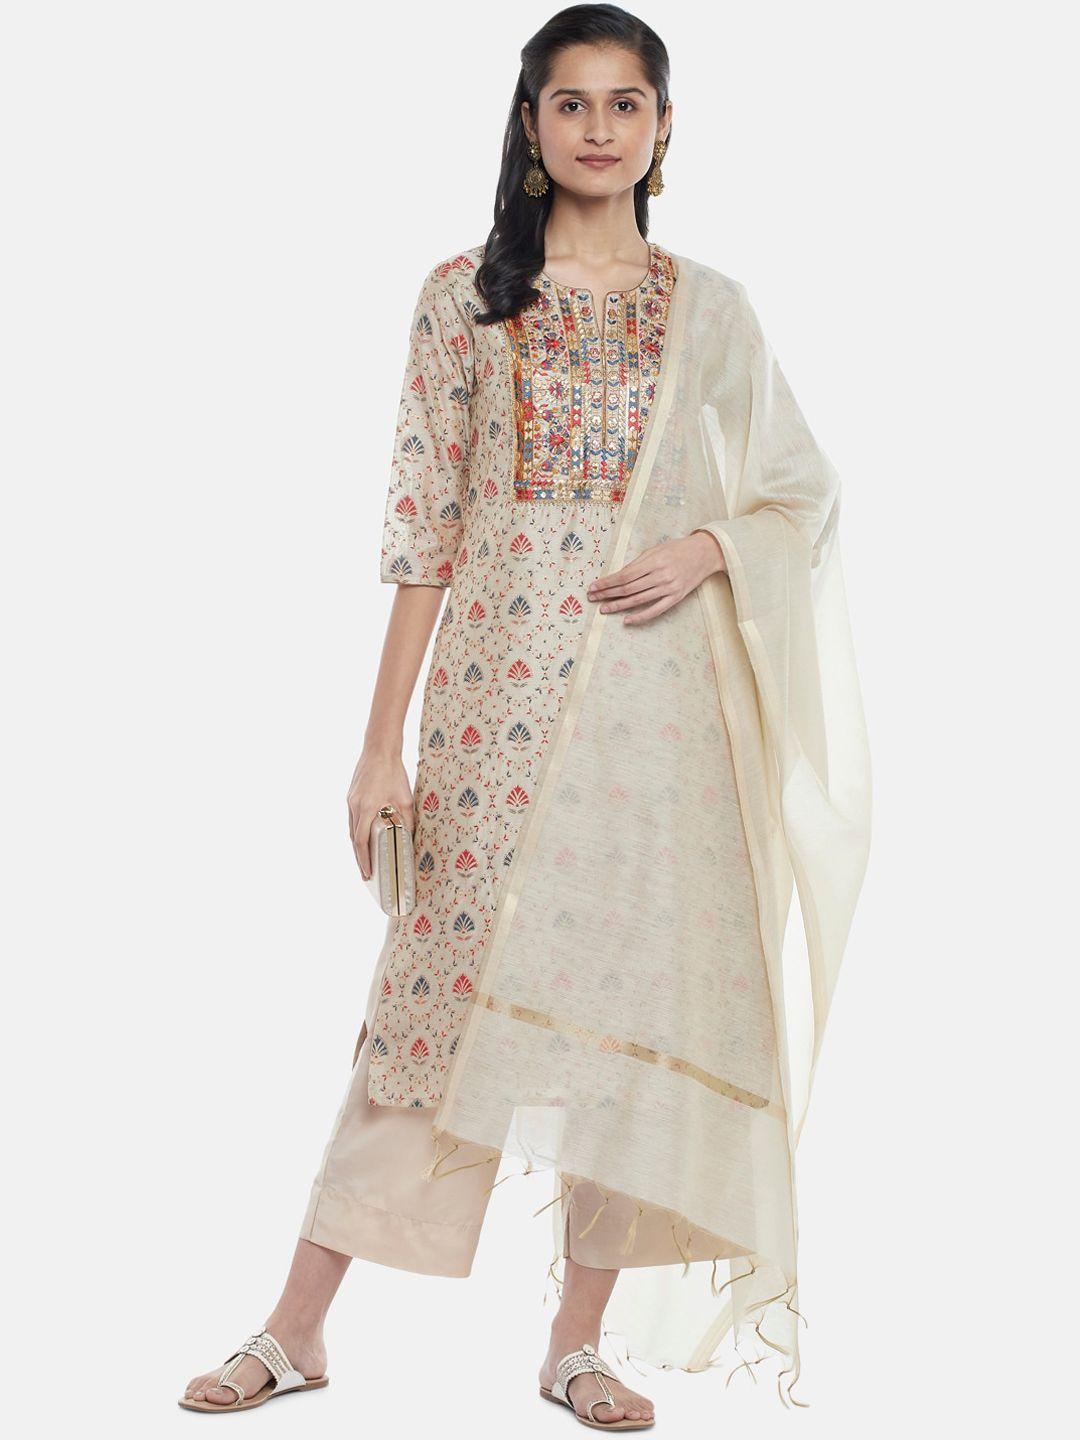 rangmanch by pantaloons women beige floral printed thread work chanderi cotton kurta set